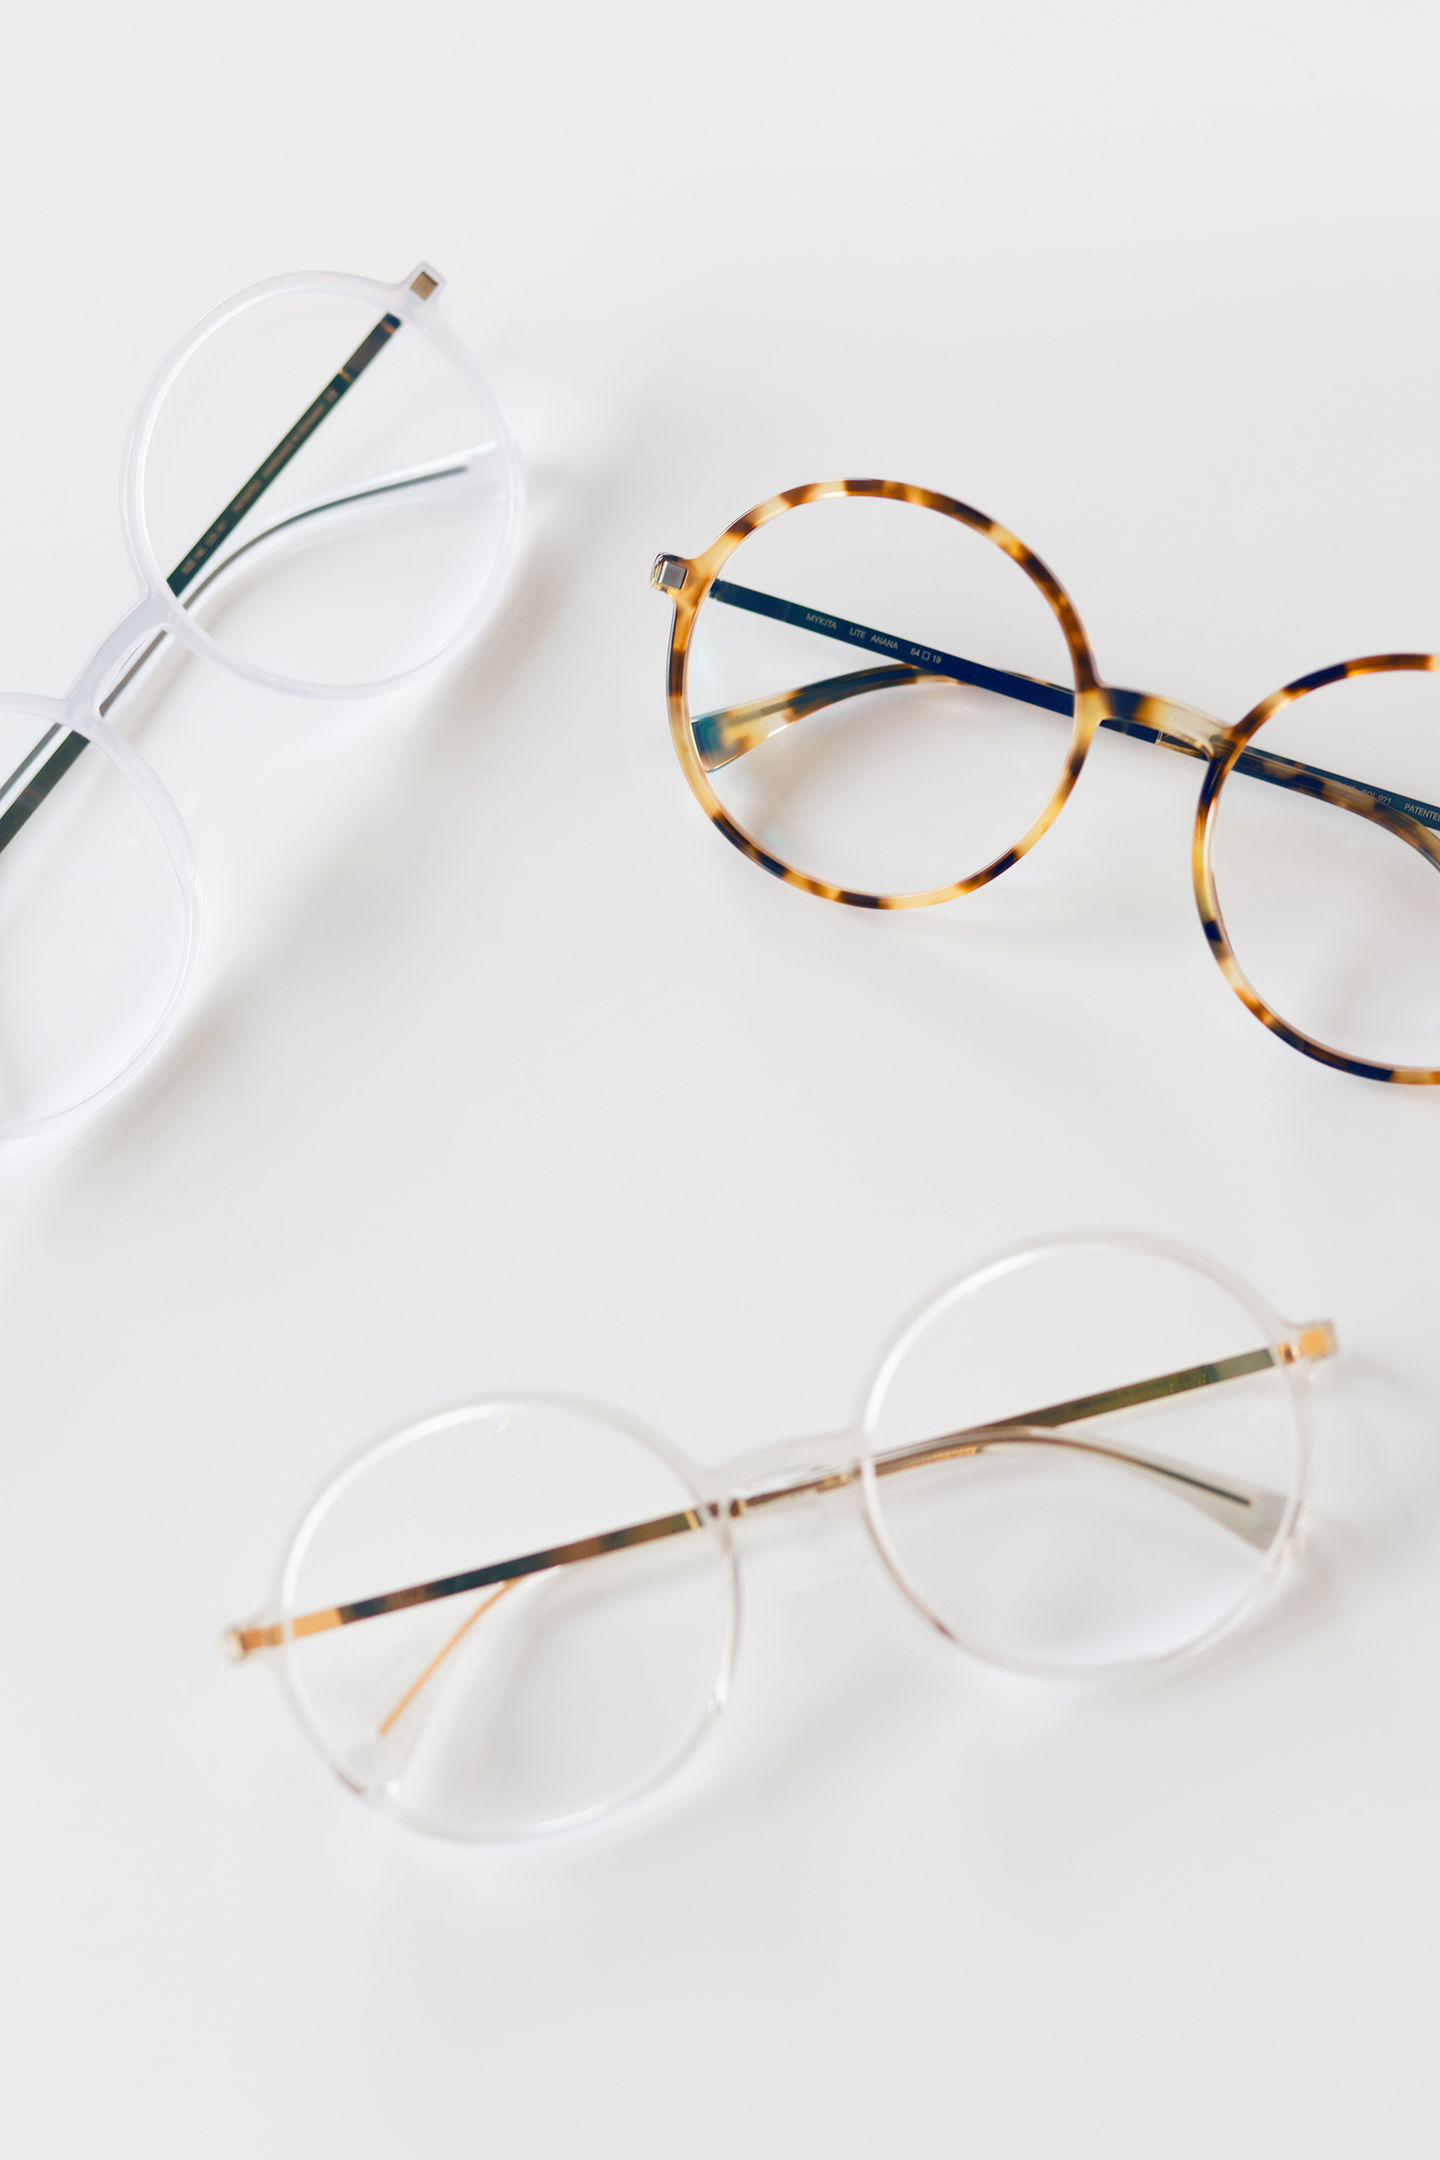 how-to-pick-the-perfect-pair-of-mykita-glasses-or-sunglasses-mykita-journal-5.jpg